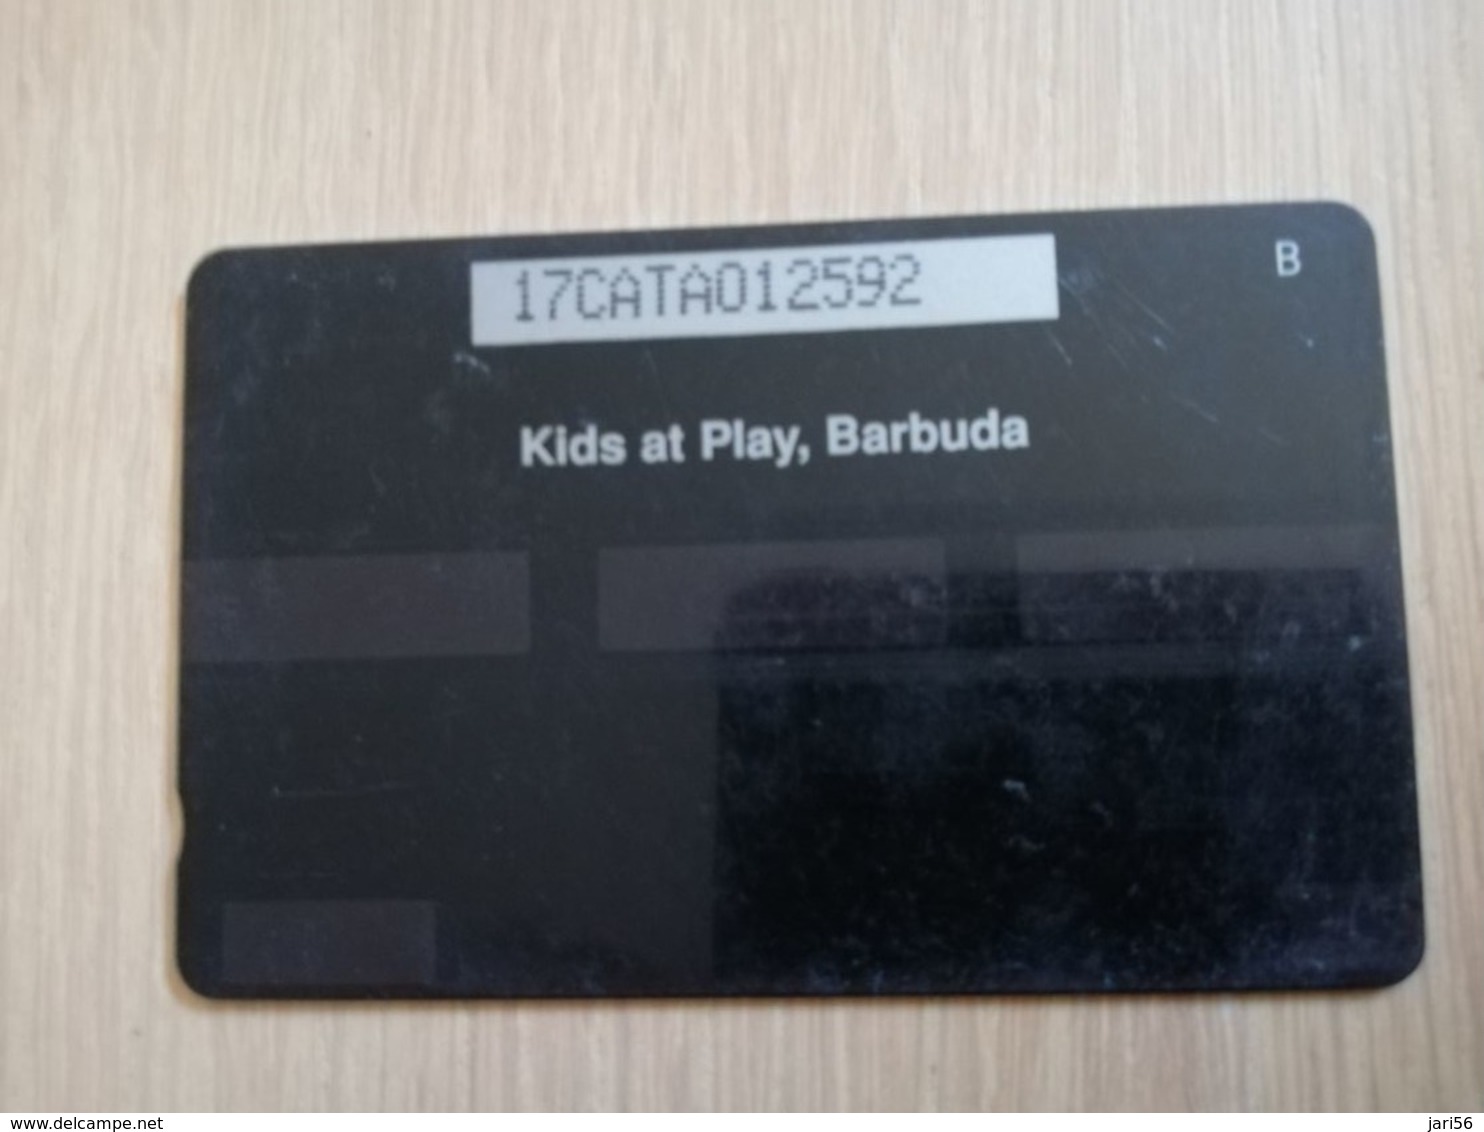 ANTIGUA & BARBUDA $ 10  BARBUDA KIDS AT PLAY         ANT-17A  CONTROL NR: 17CATA      NEW C&W LOGO **2546** - Antigua Et Barbuda